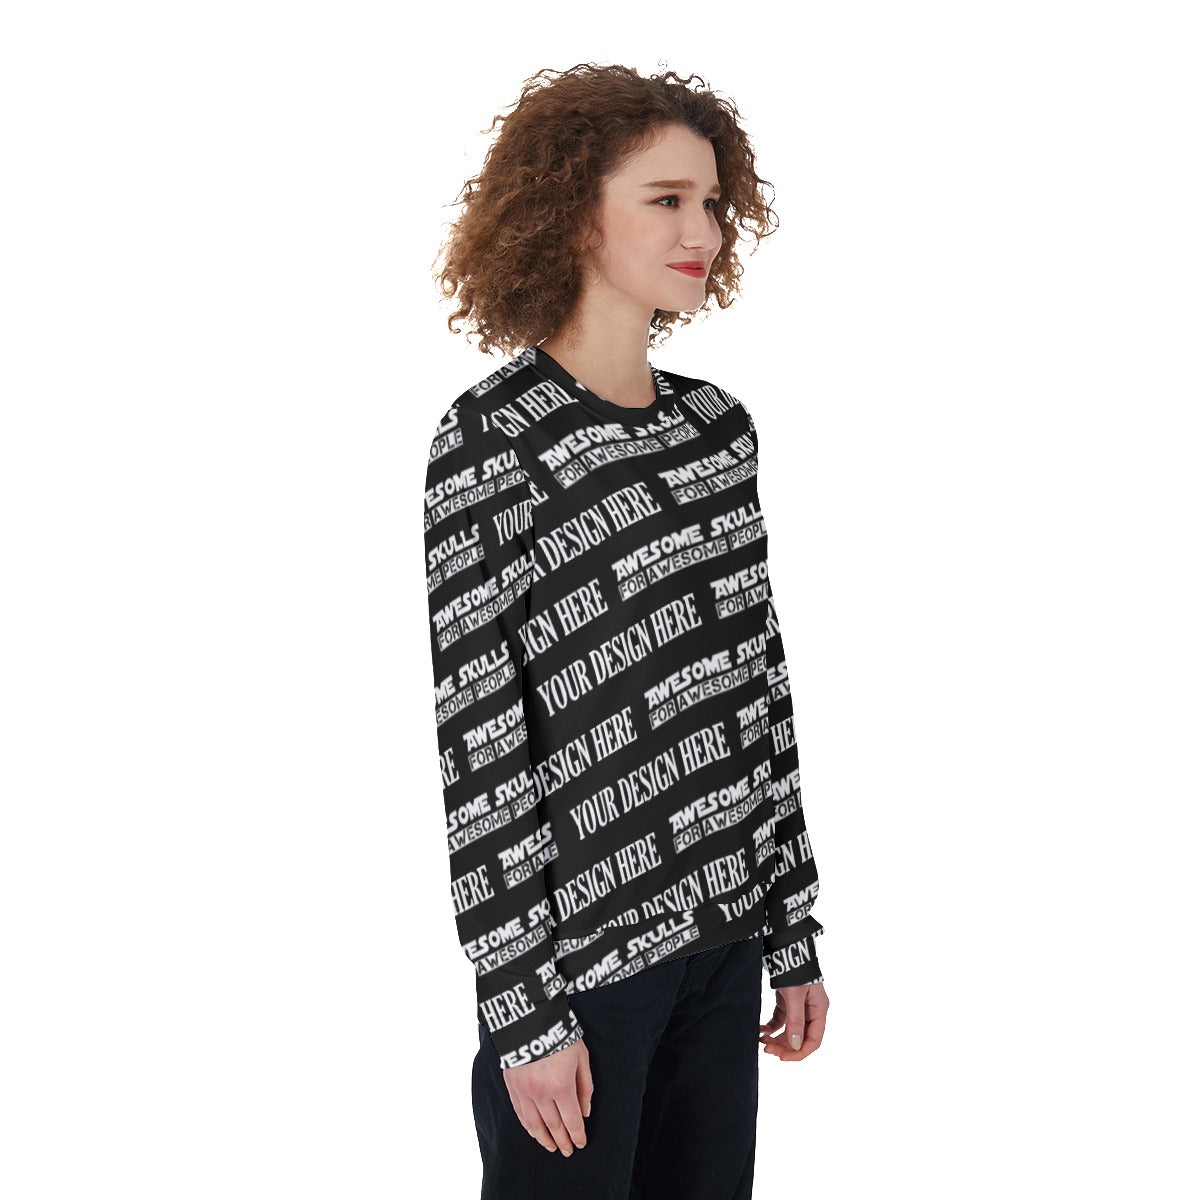 Custom print on demand pod Women's Hoodie Heavy Fleece Sweatshirt